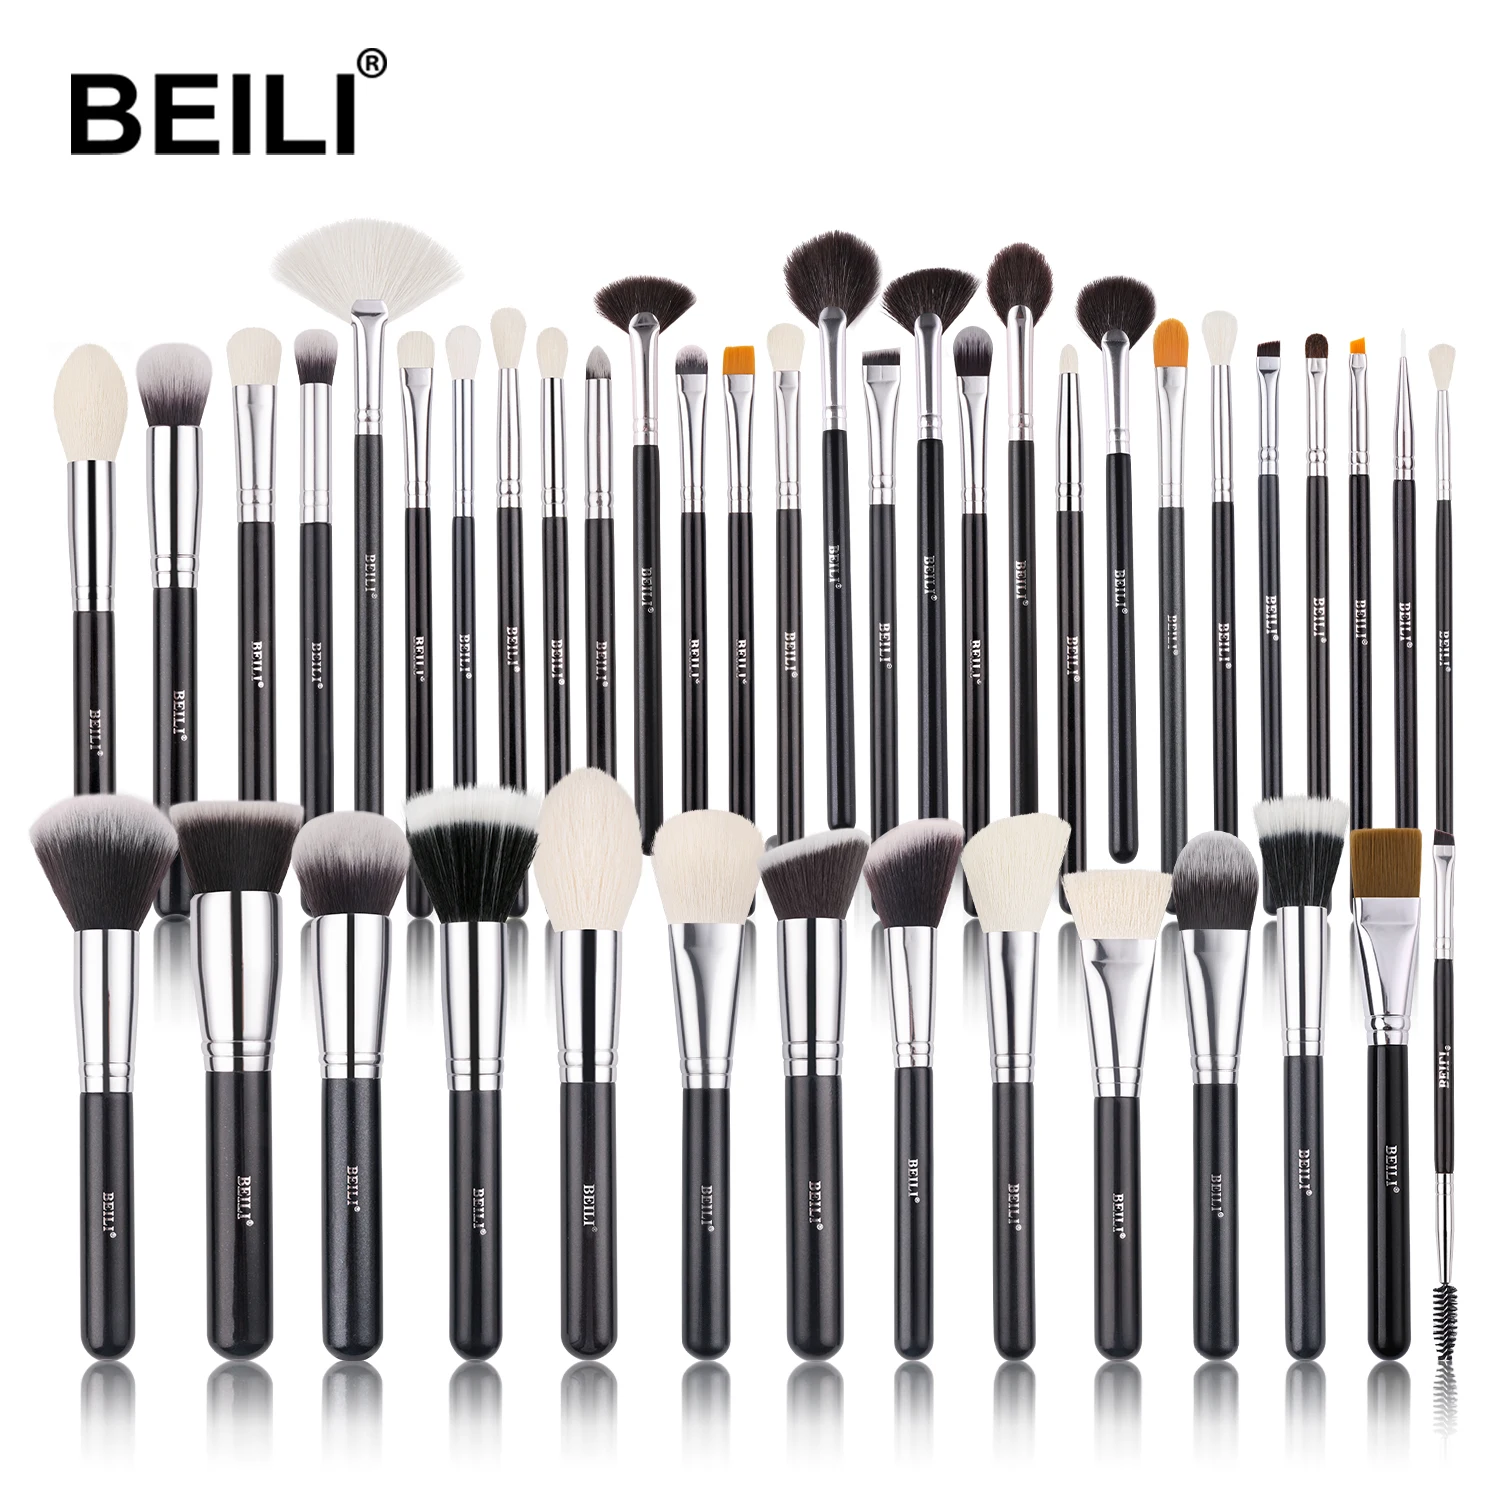 BEILI Black 42pcs Make Up Brush set Professional Natural hair Foundation Powder Eyebrow Eyeshadow makeup brush